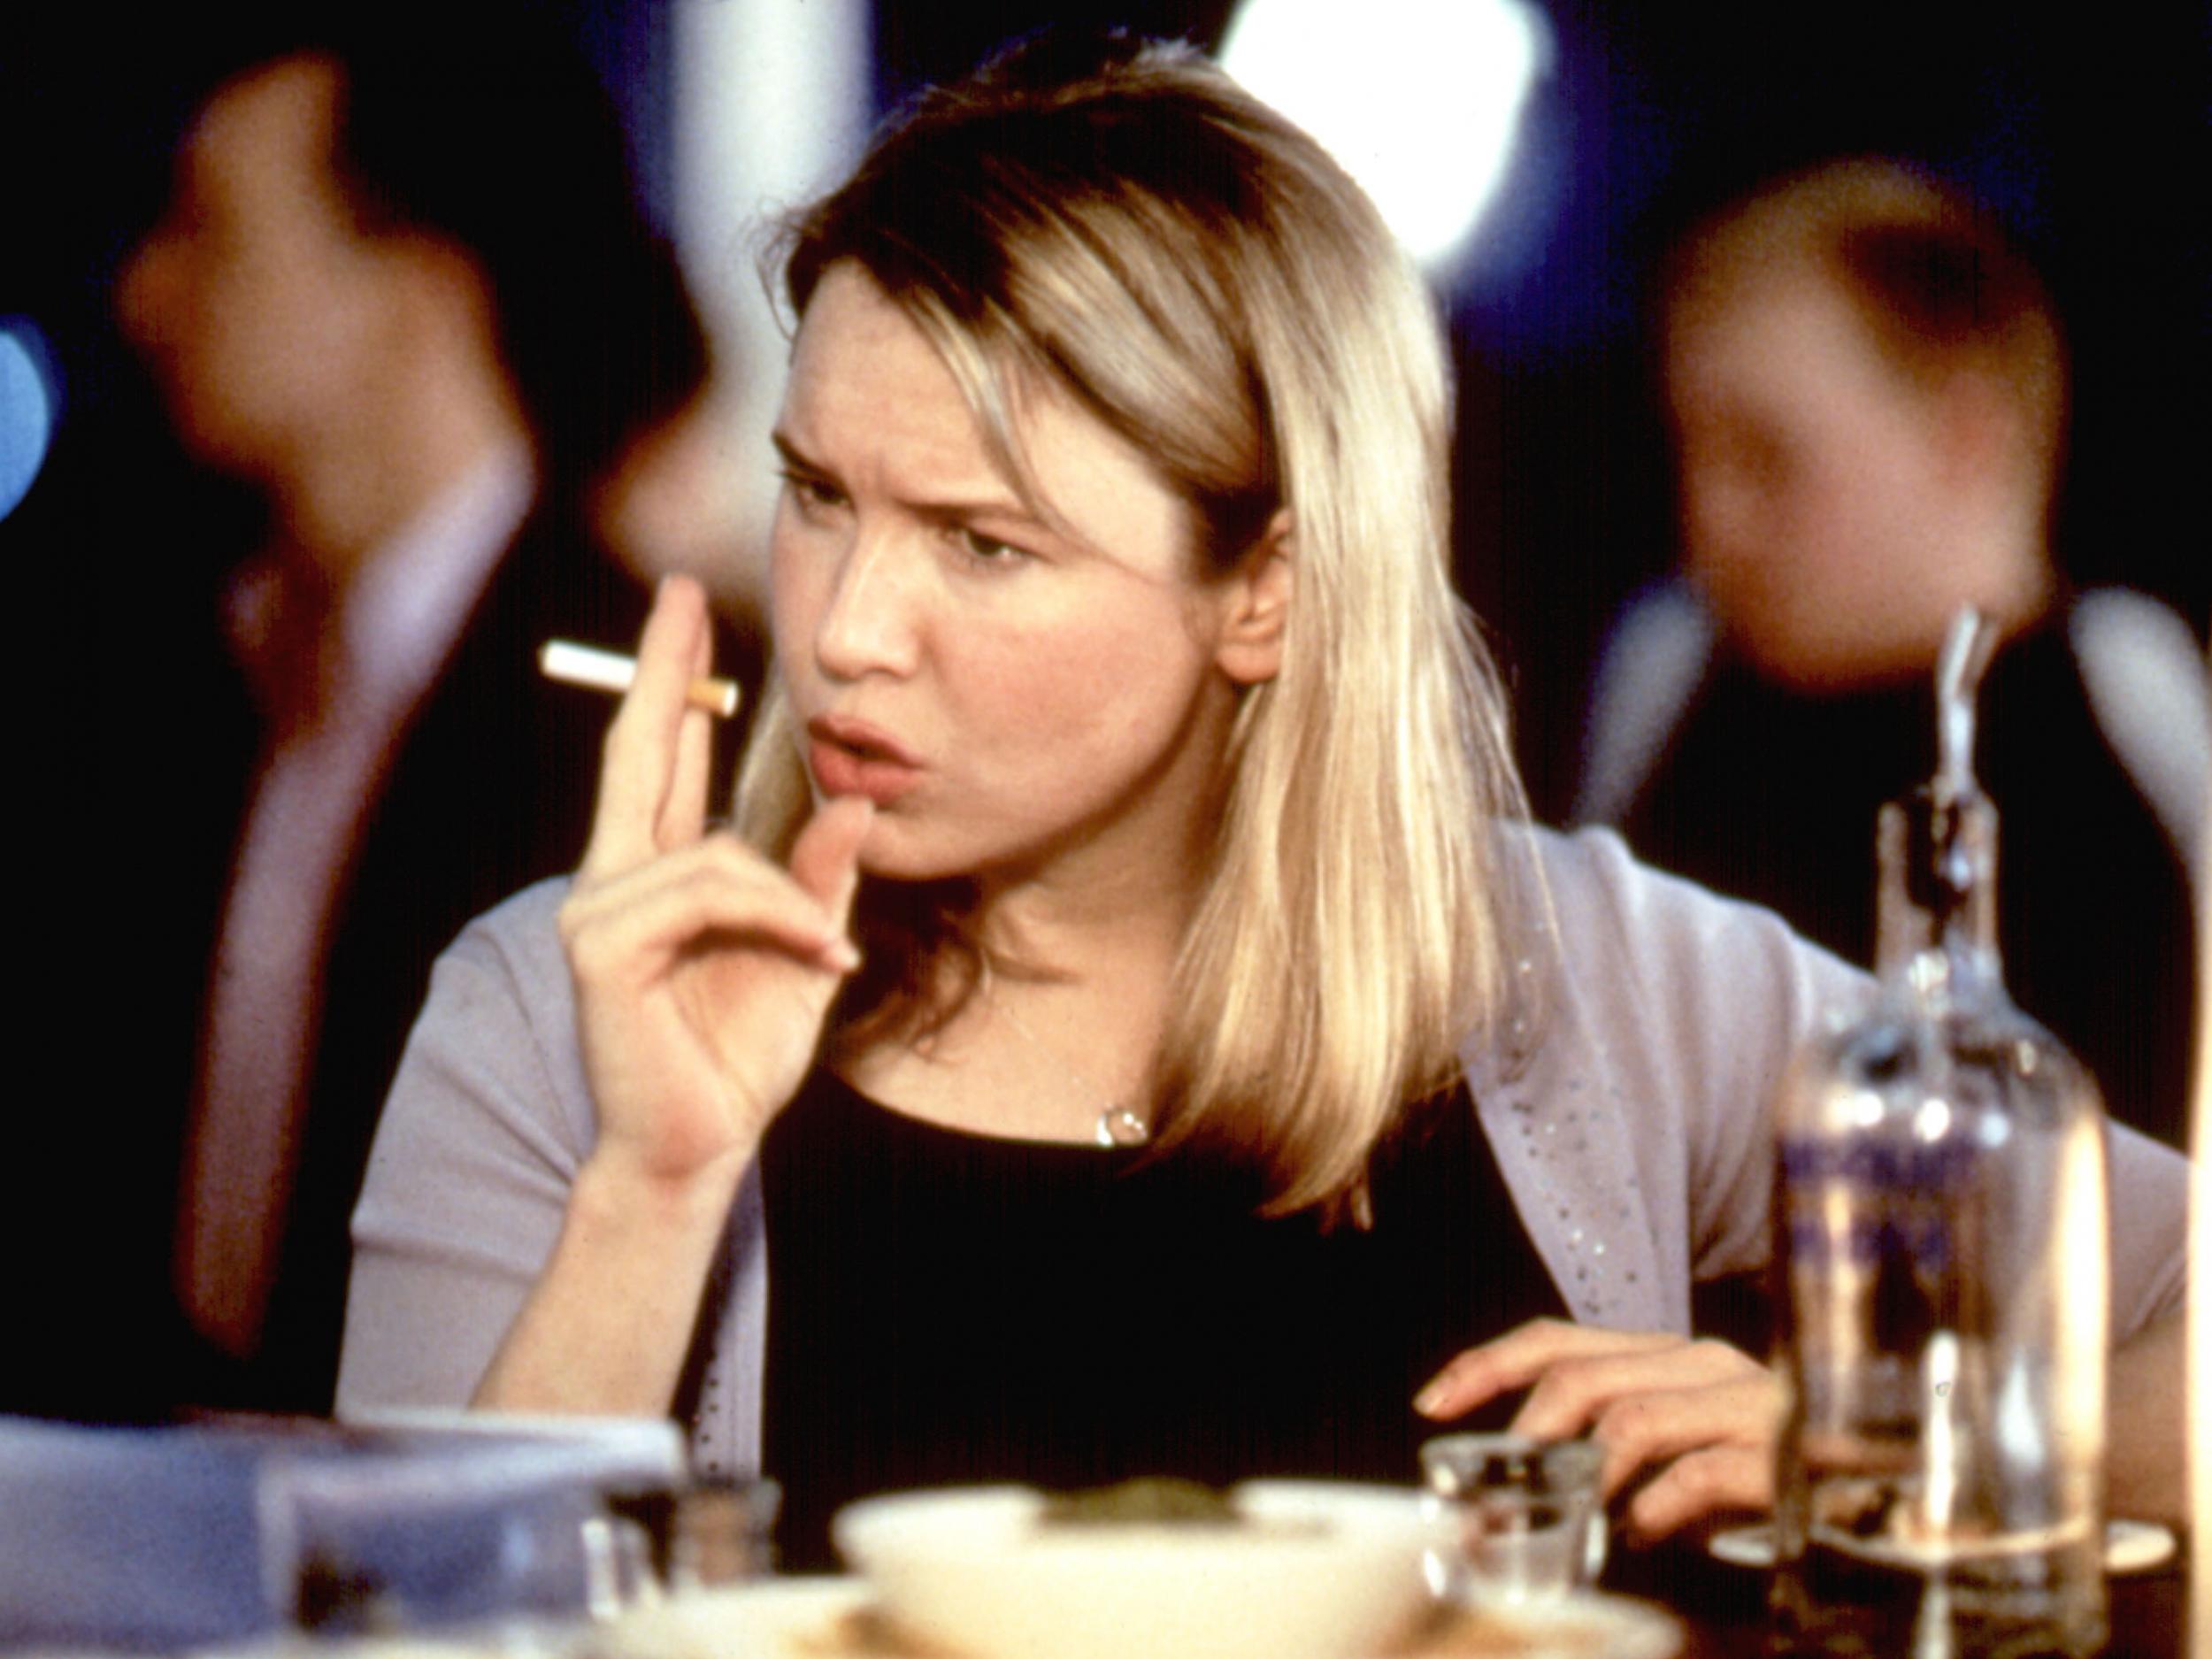 Renee Zellweger starred in 2001's ‘Bridget Jones's Diary’, which mirrored the plot of ‘Pride and Prejudice’ (Movies